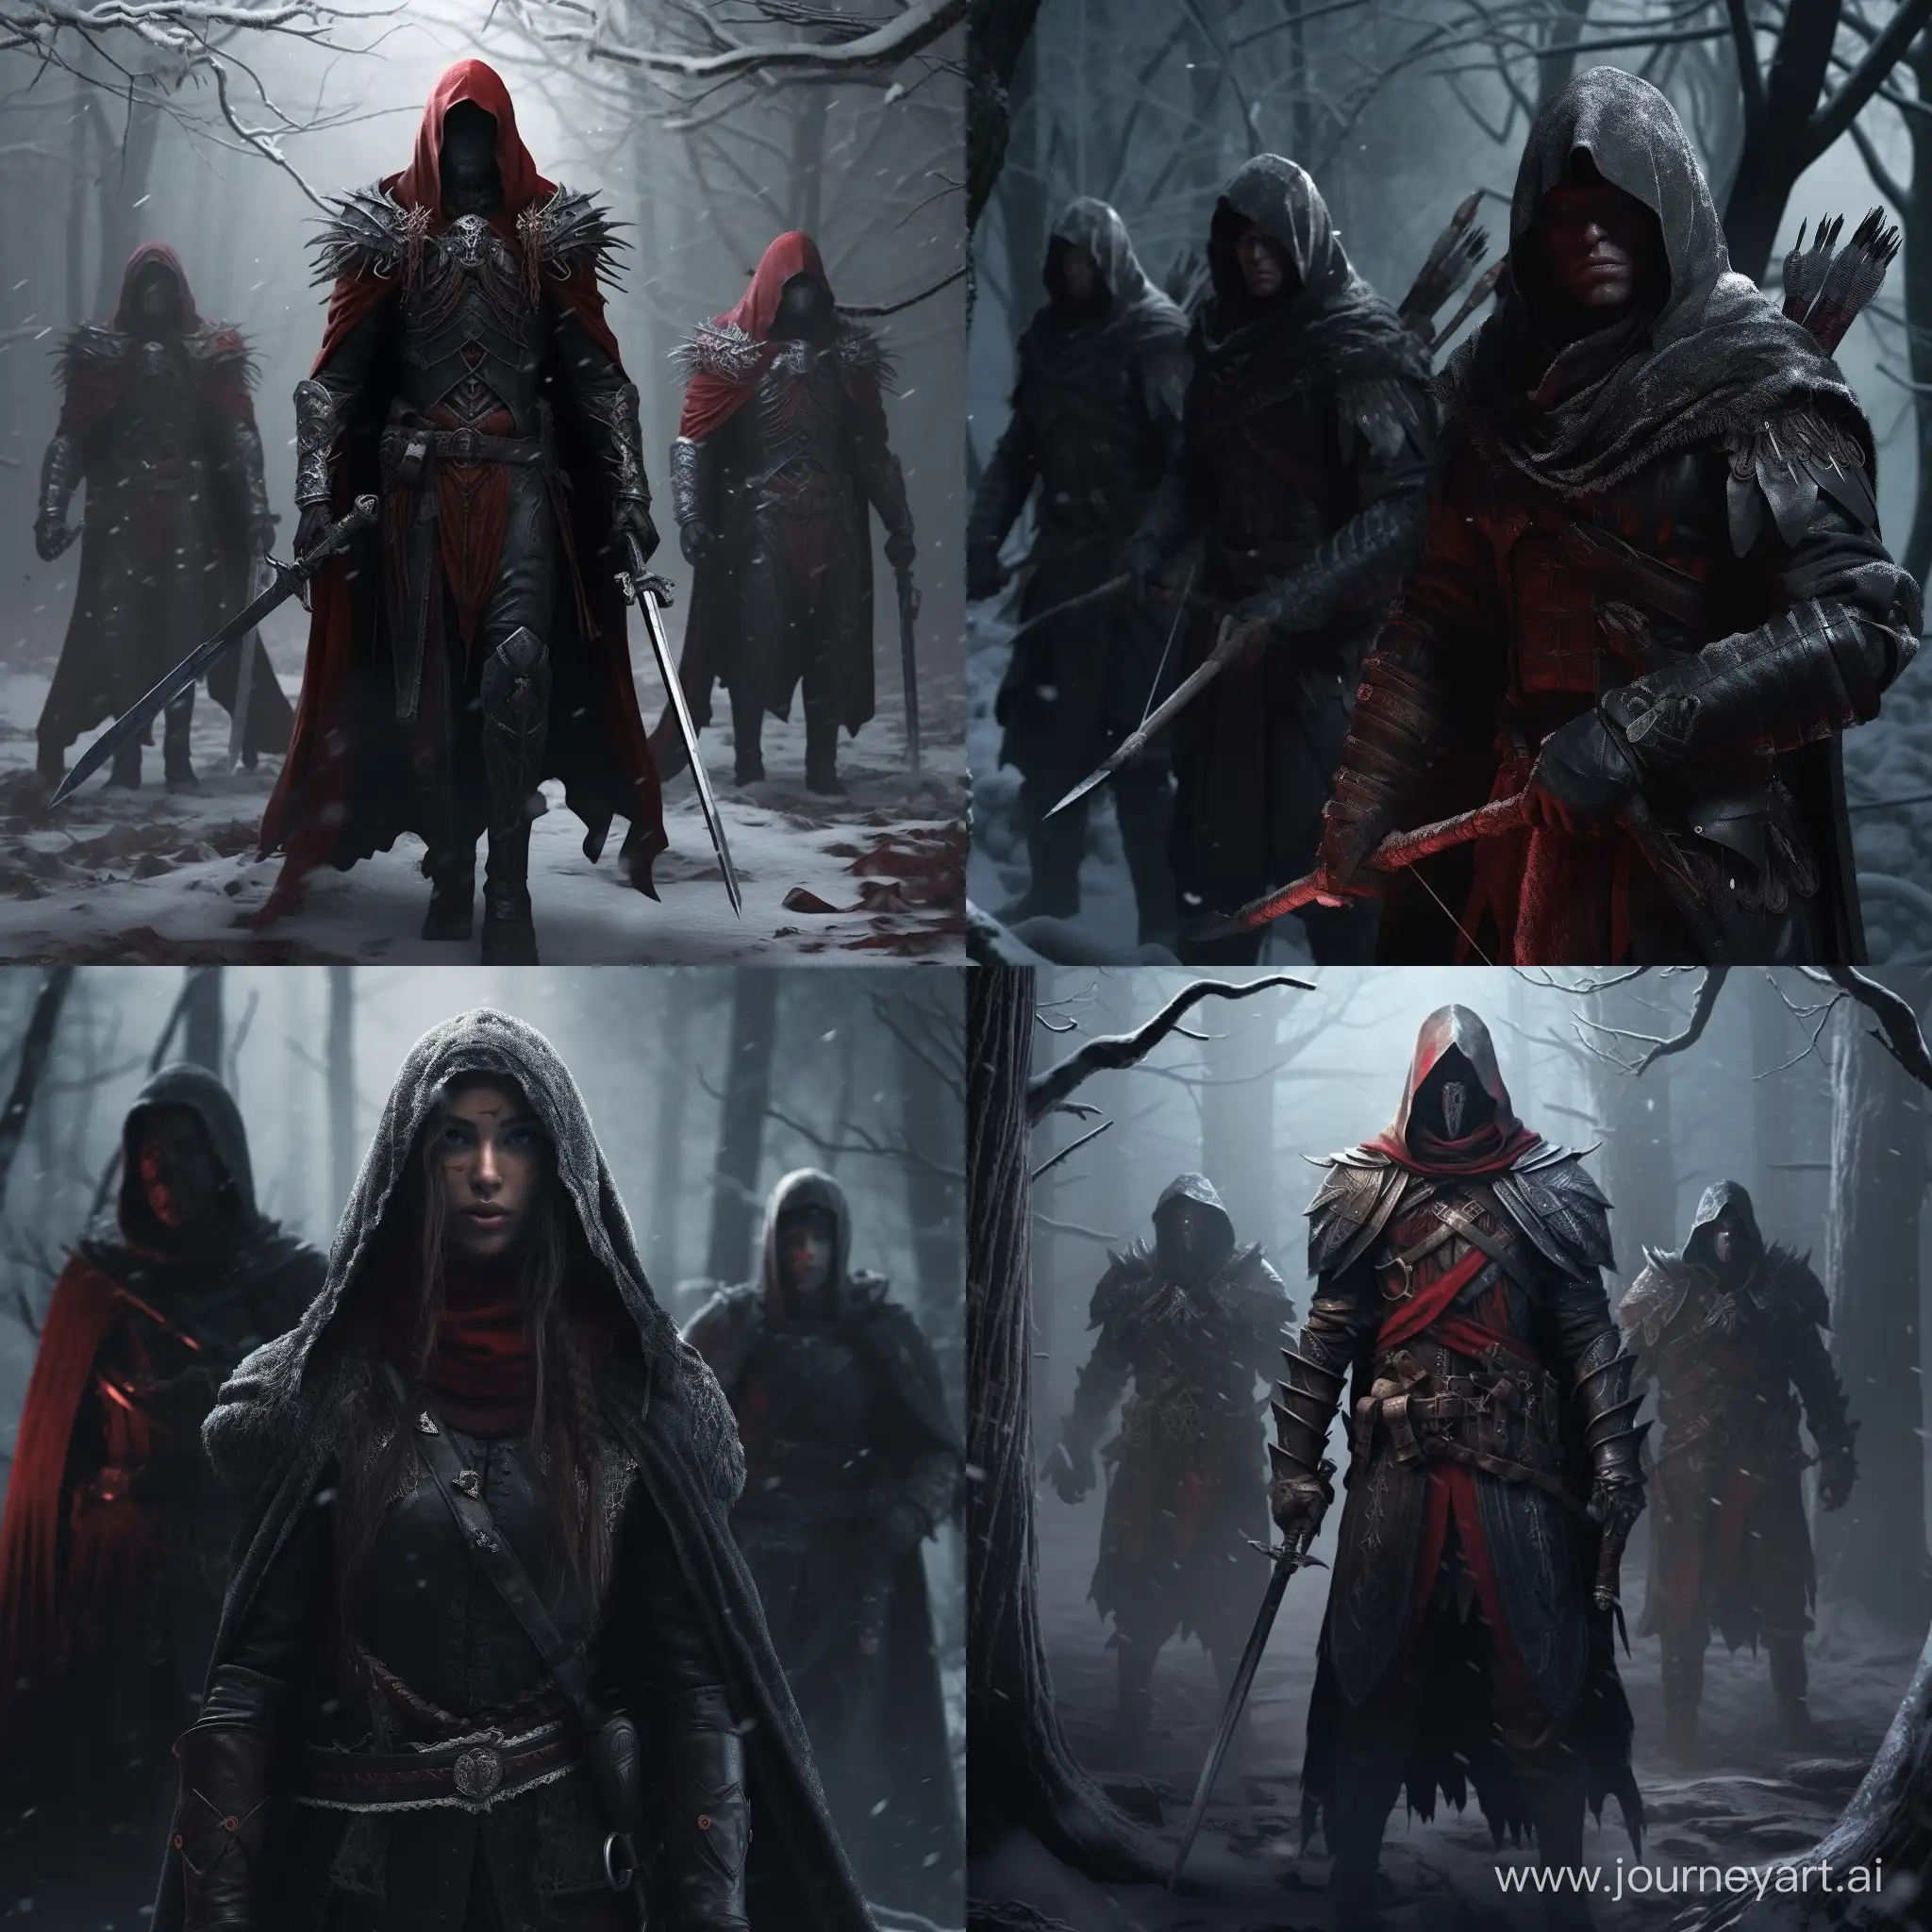 Fantasy-Battle-Armored-Bandits-in-a-Snowy-Dark-Forest